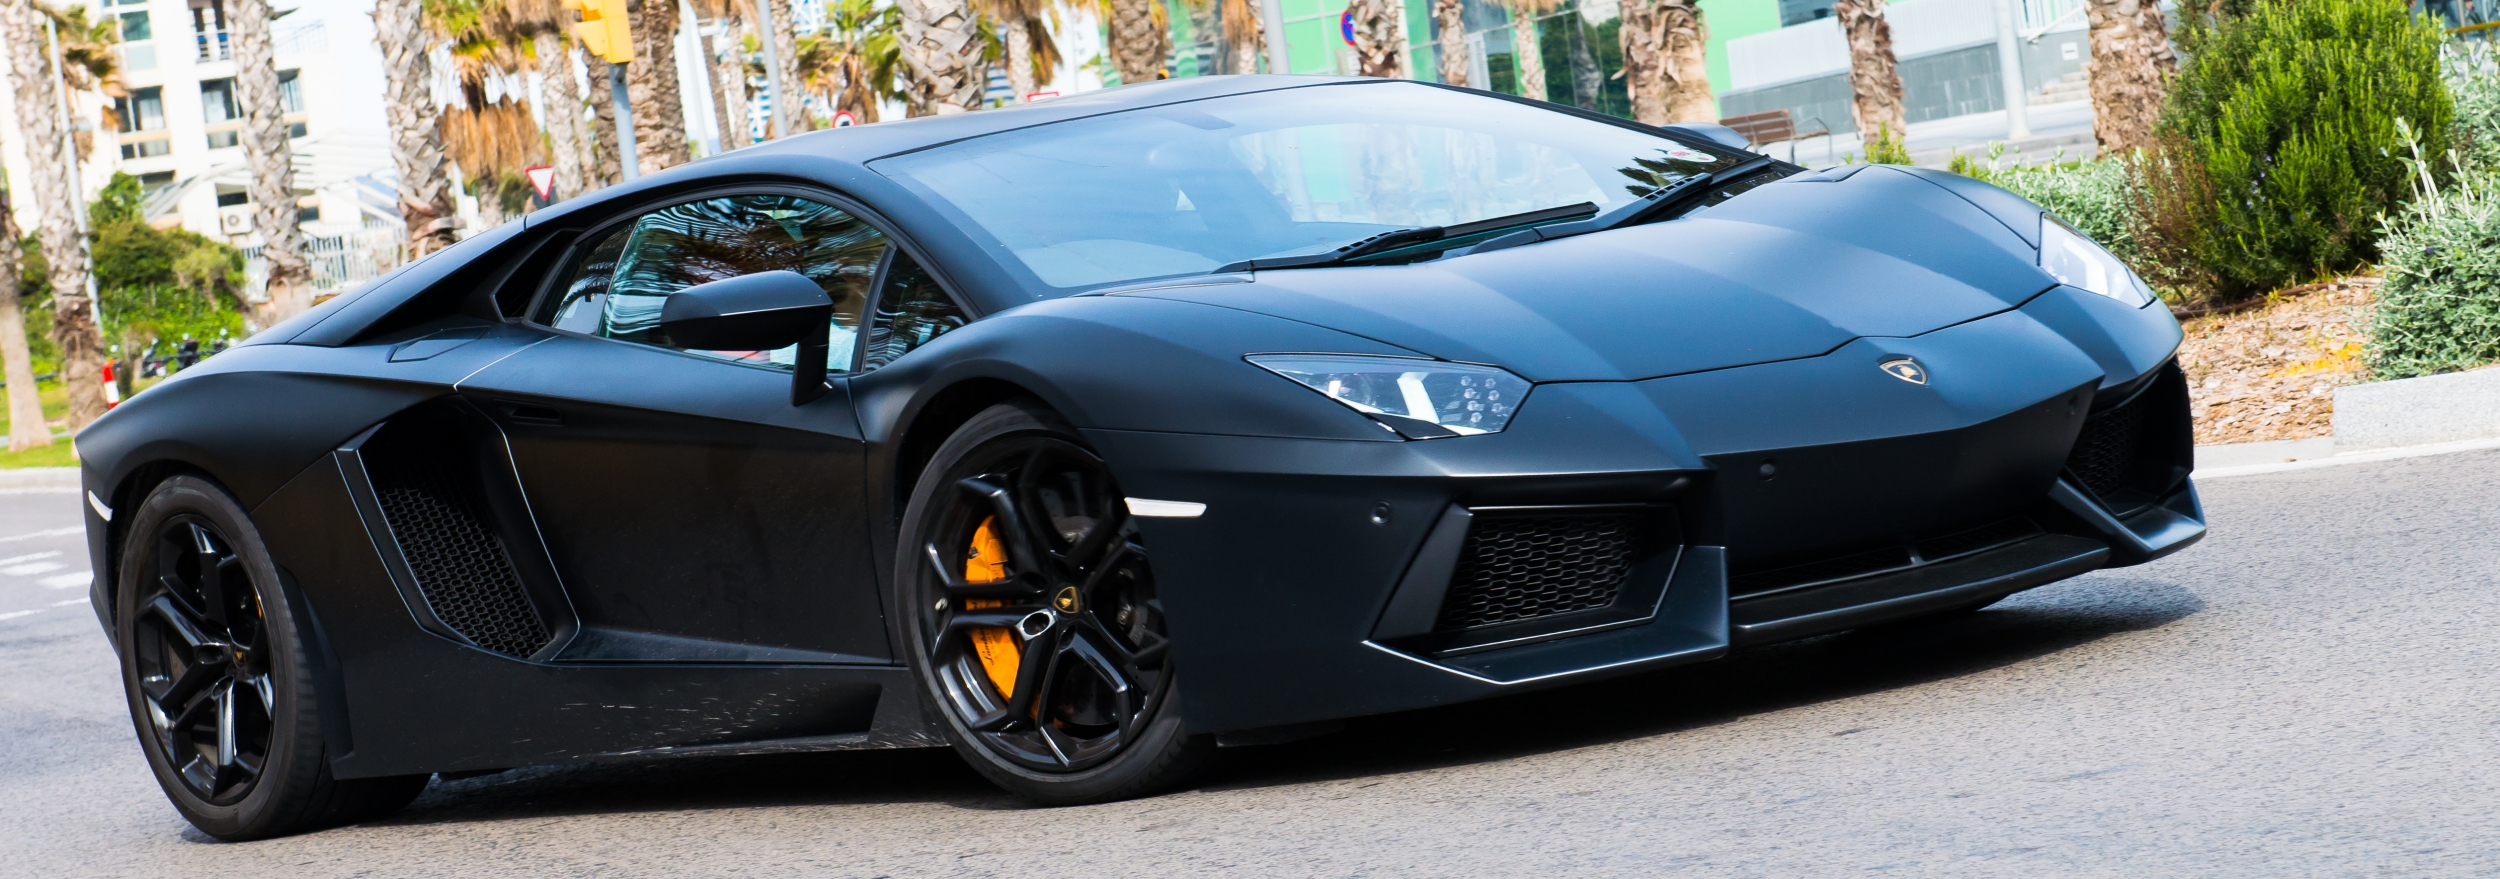 Lamborghini_Aventador_3